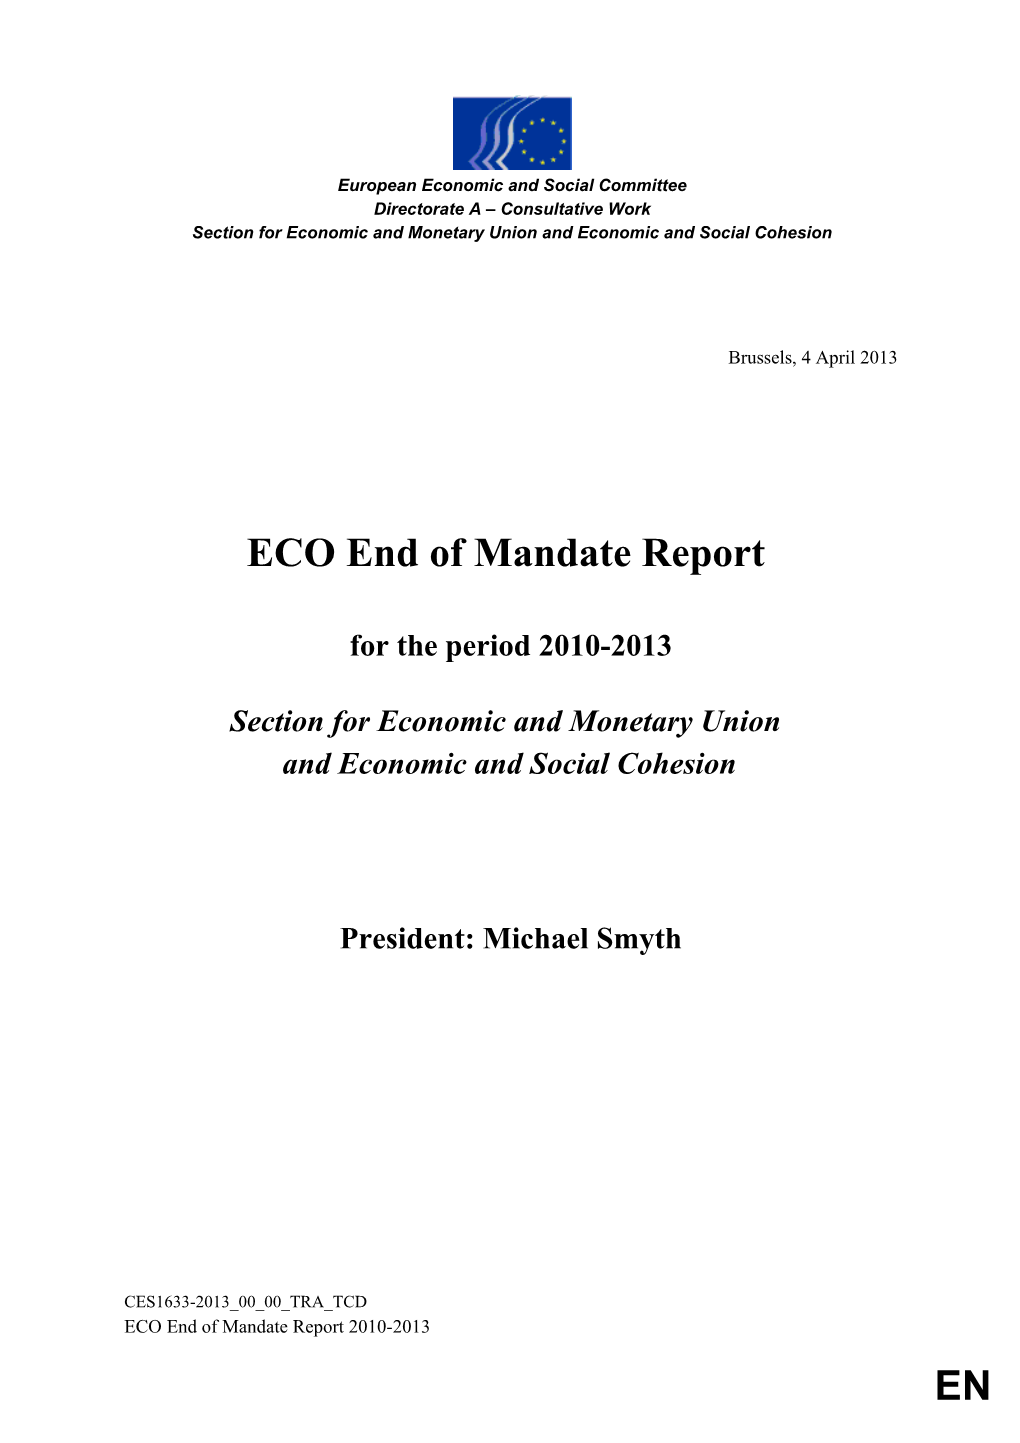 End of Mandate Report 2013